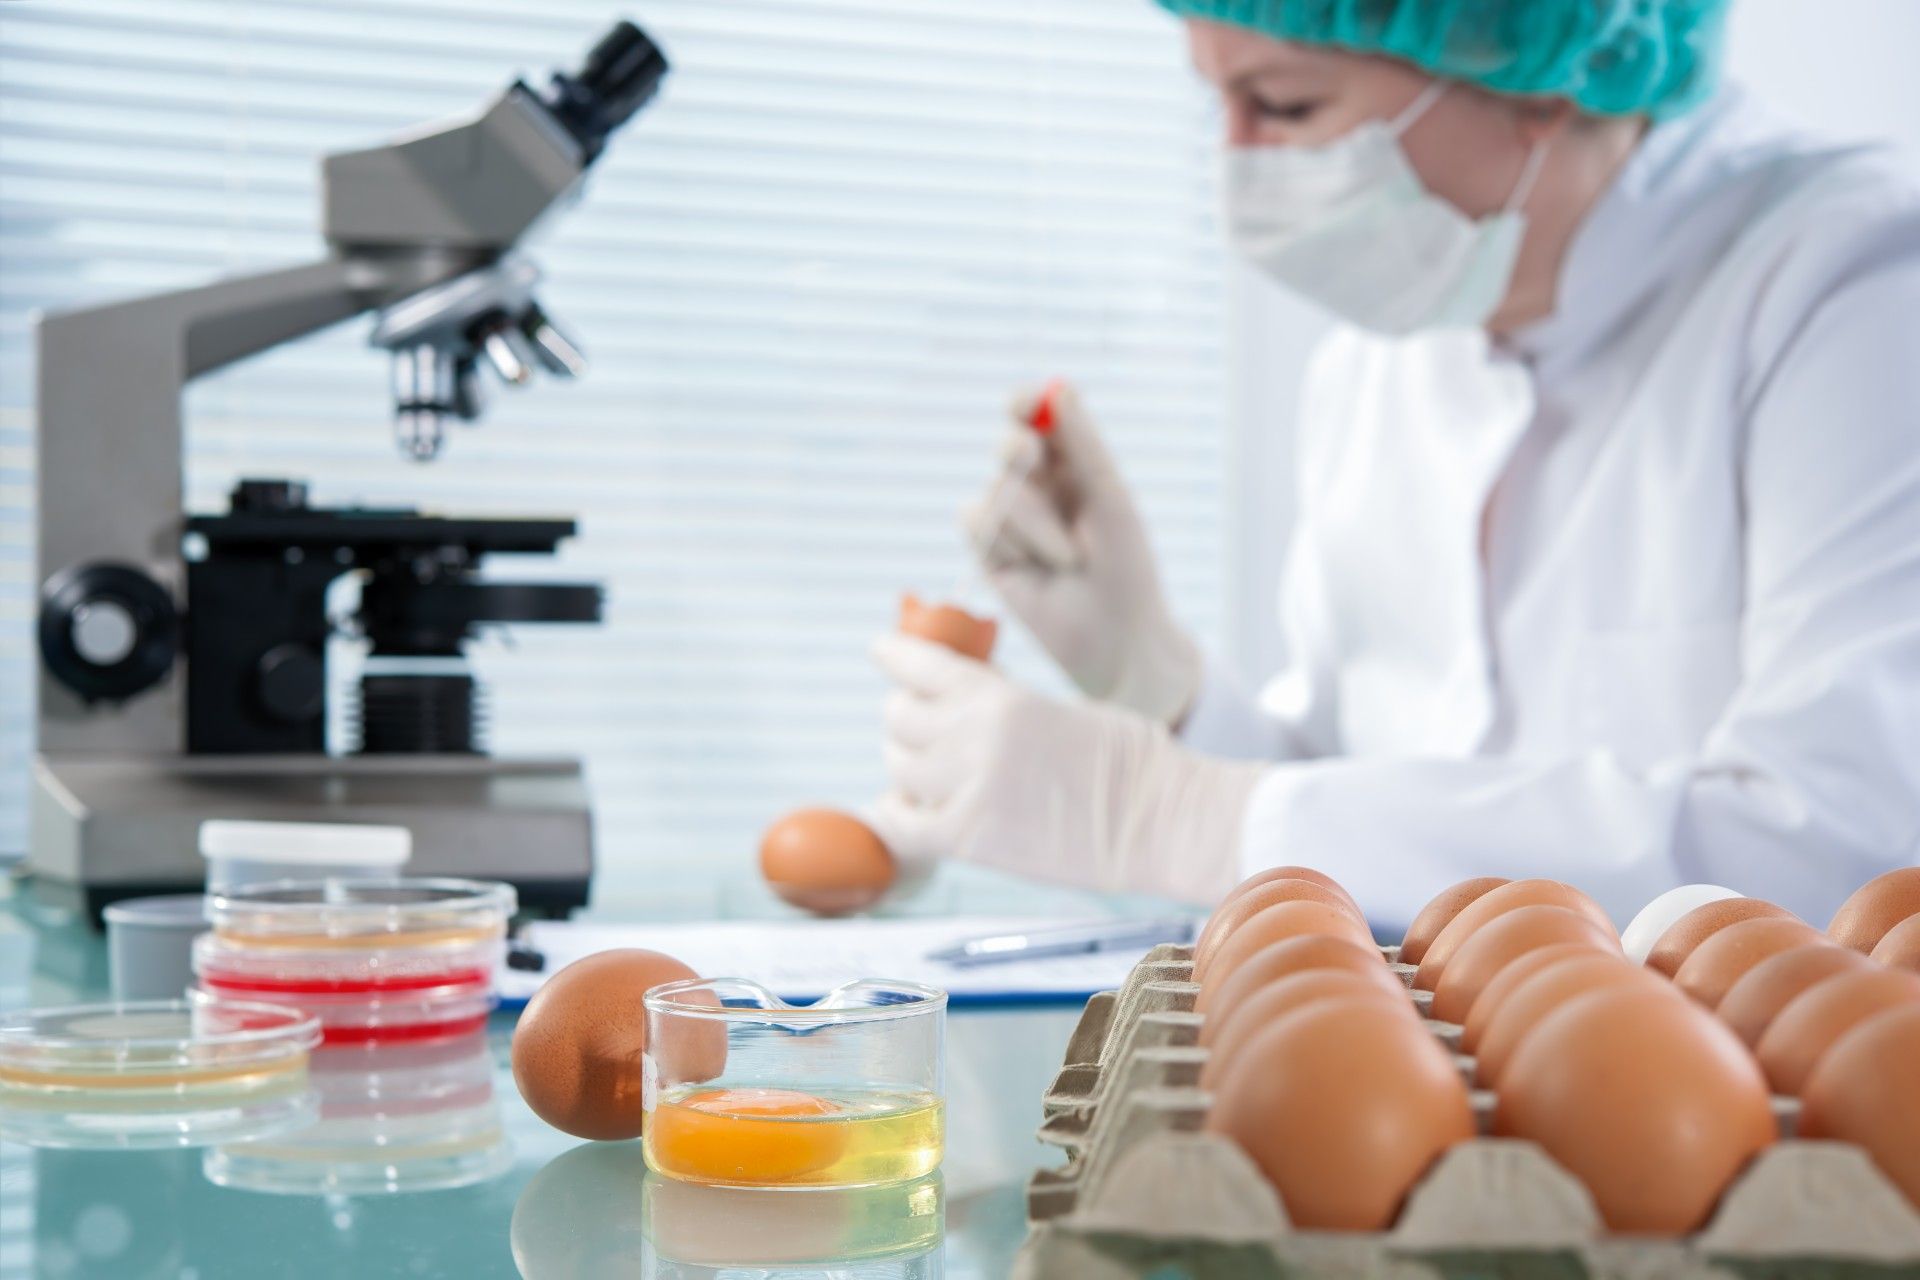 Scientist tests eggs in lab - UK salmonella outbreak